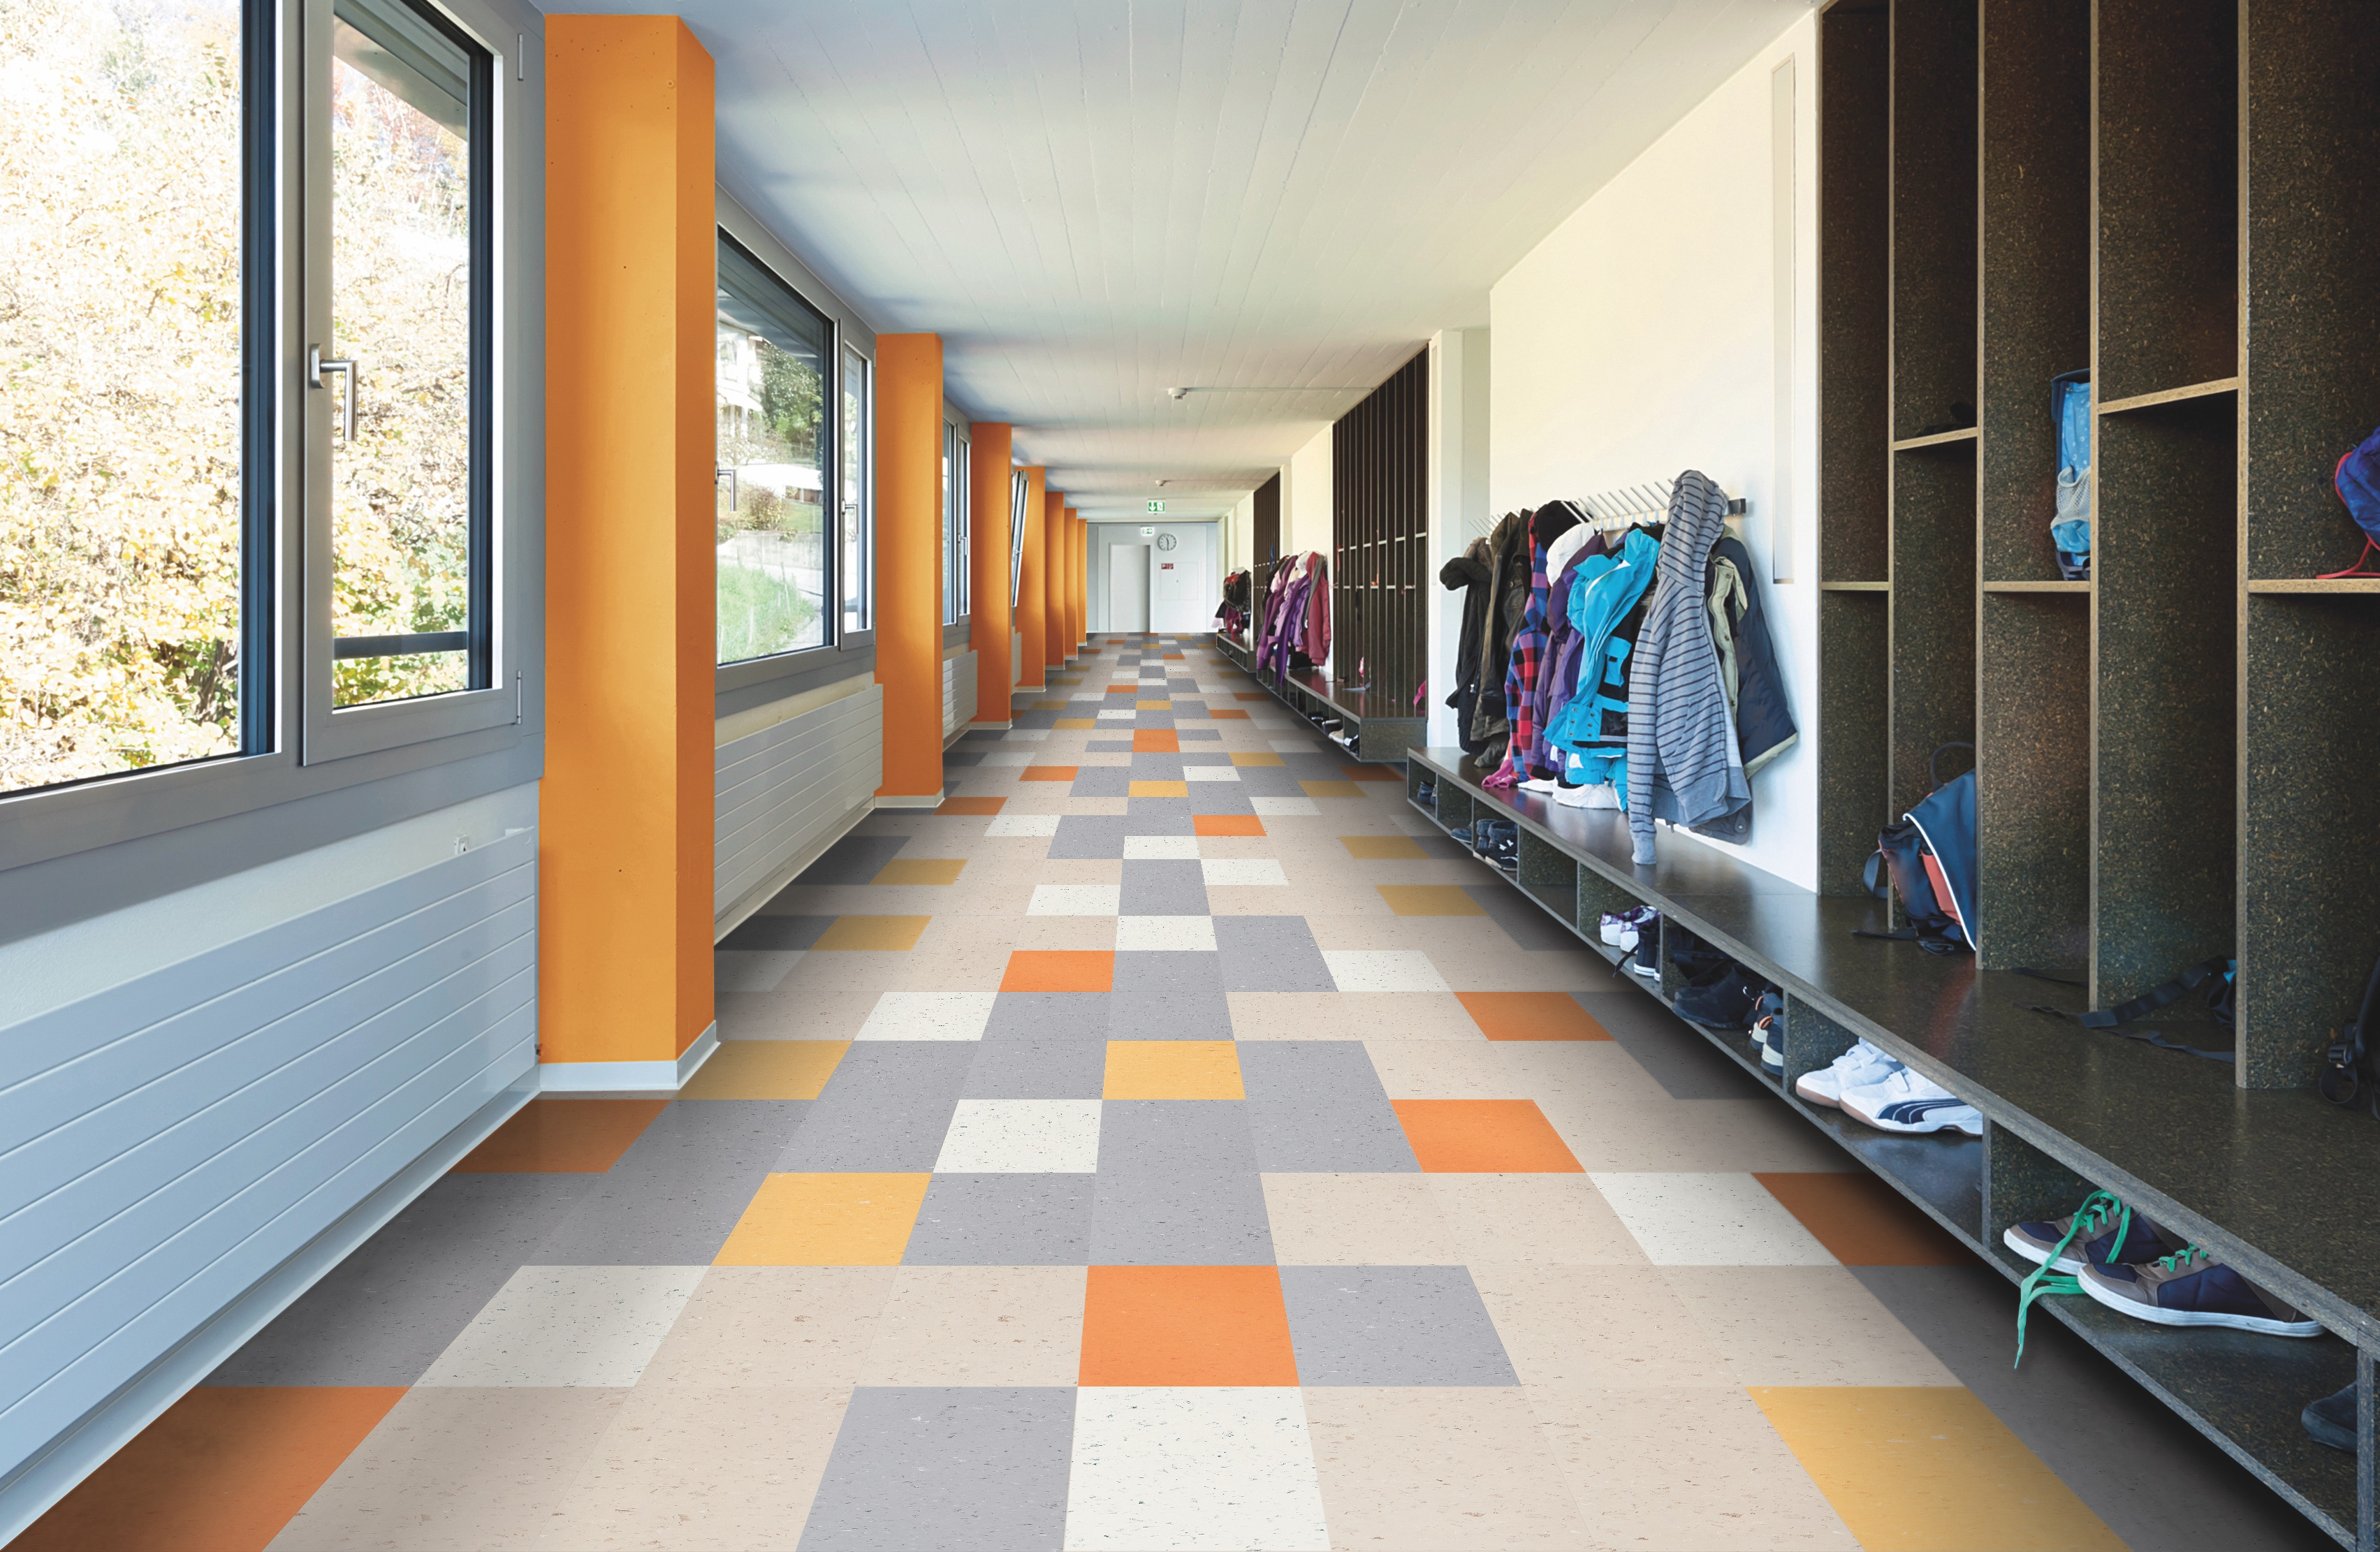 Commercial flooring in school in multi-color checker pattern